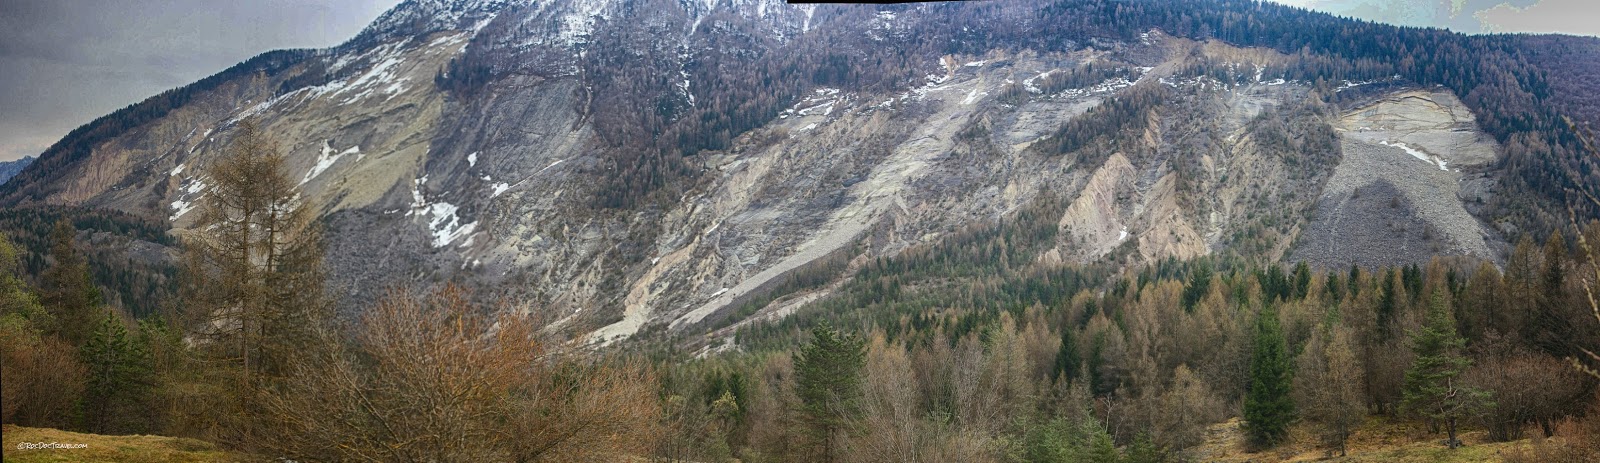 Vaiont dam landslide disaster Italy 1963 flood geology travel trip tour copyright rocdoctravel.com